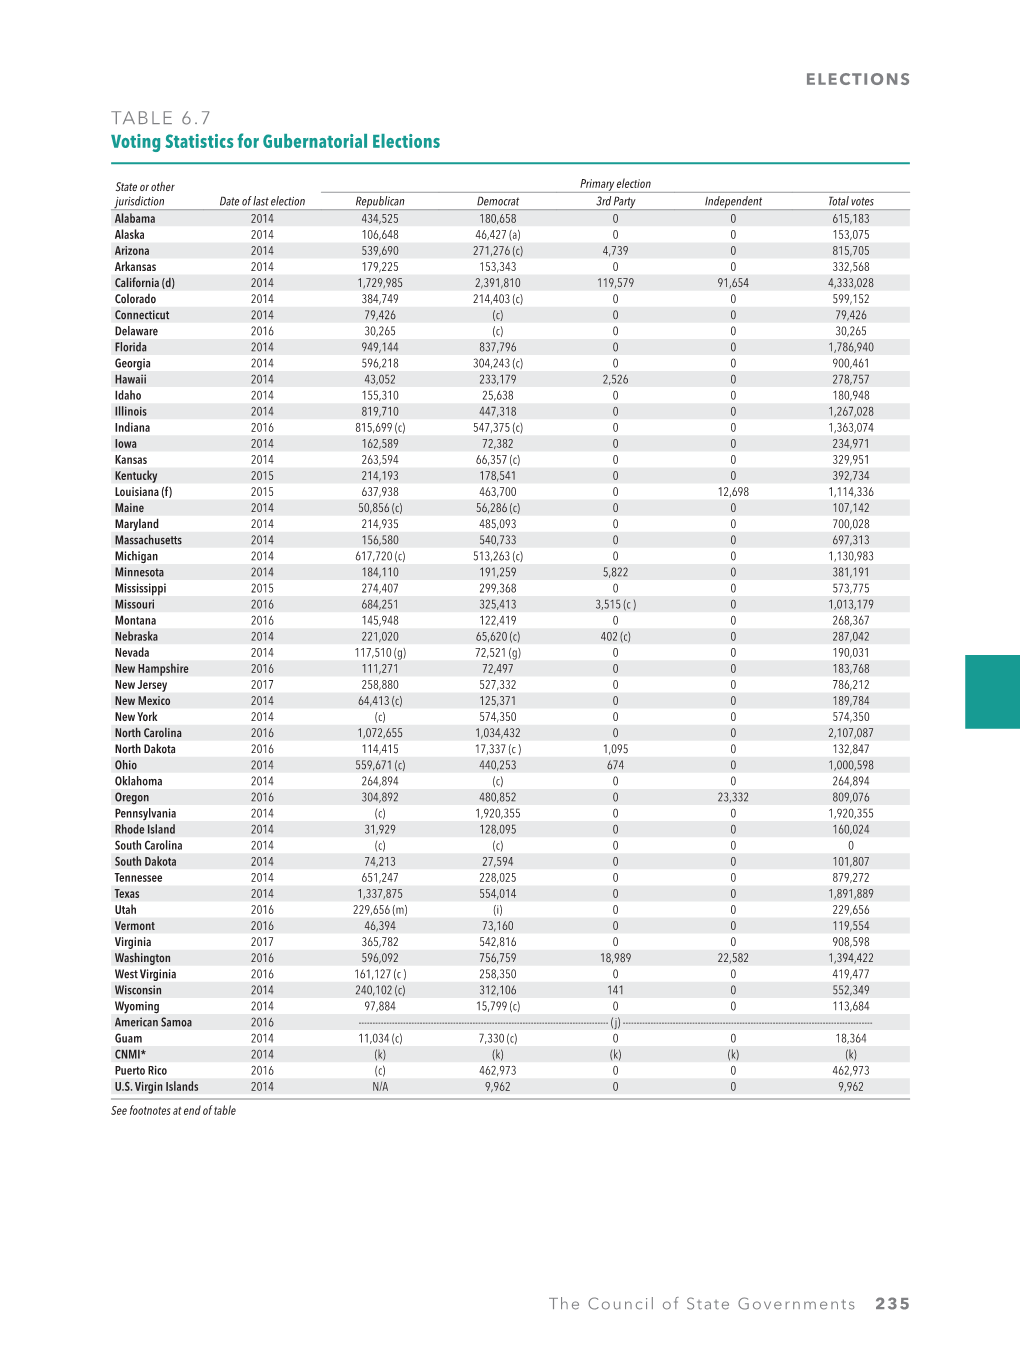 TABLE 6.7 Voting Statistics for Gubernatorial Elections